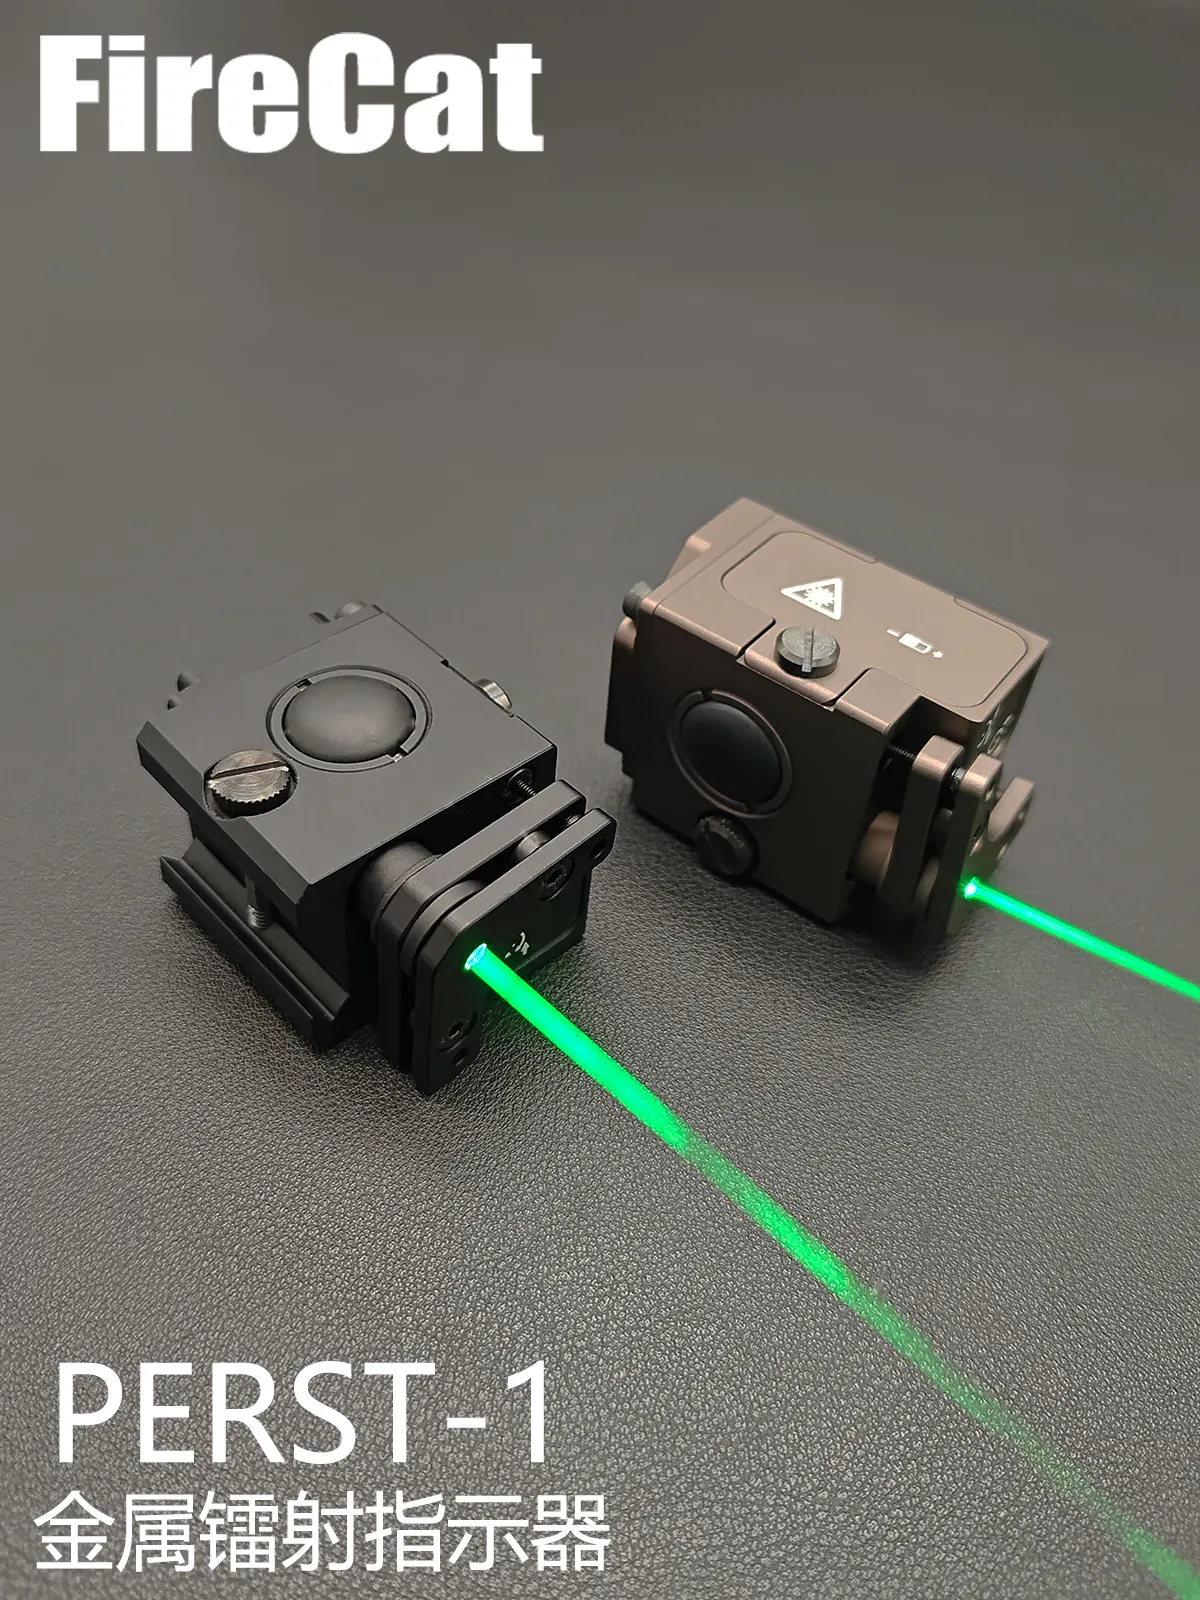 Underhung Zenit Pert-1 Wskaźnik laserowy Zielony laserowy rozrywka metal regulowana latarka x400V